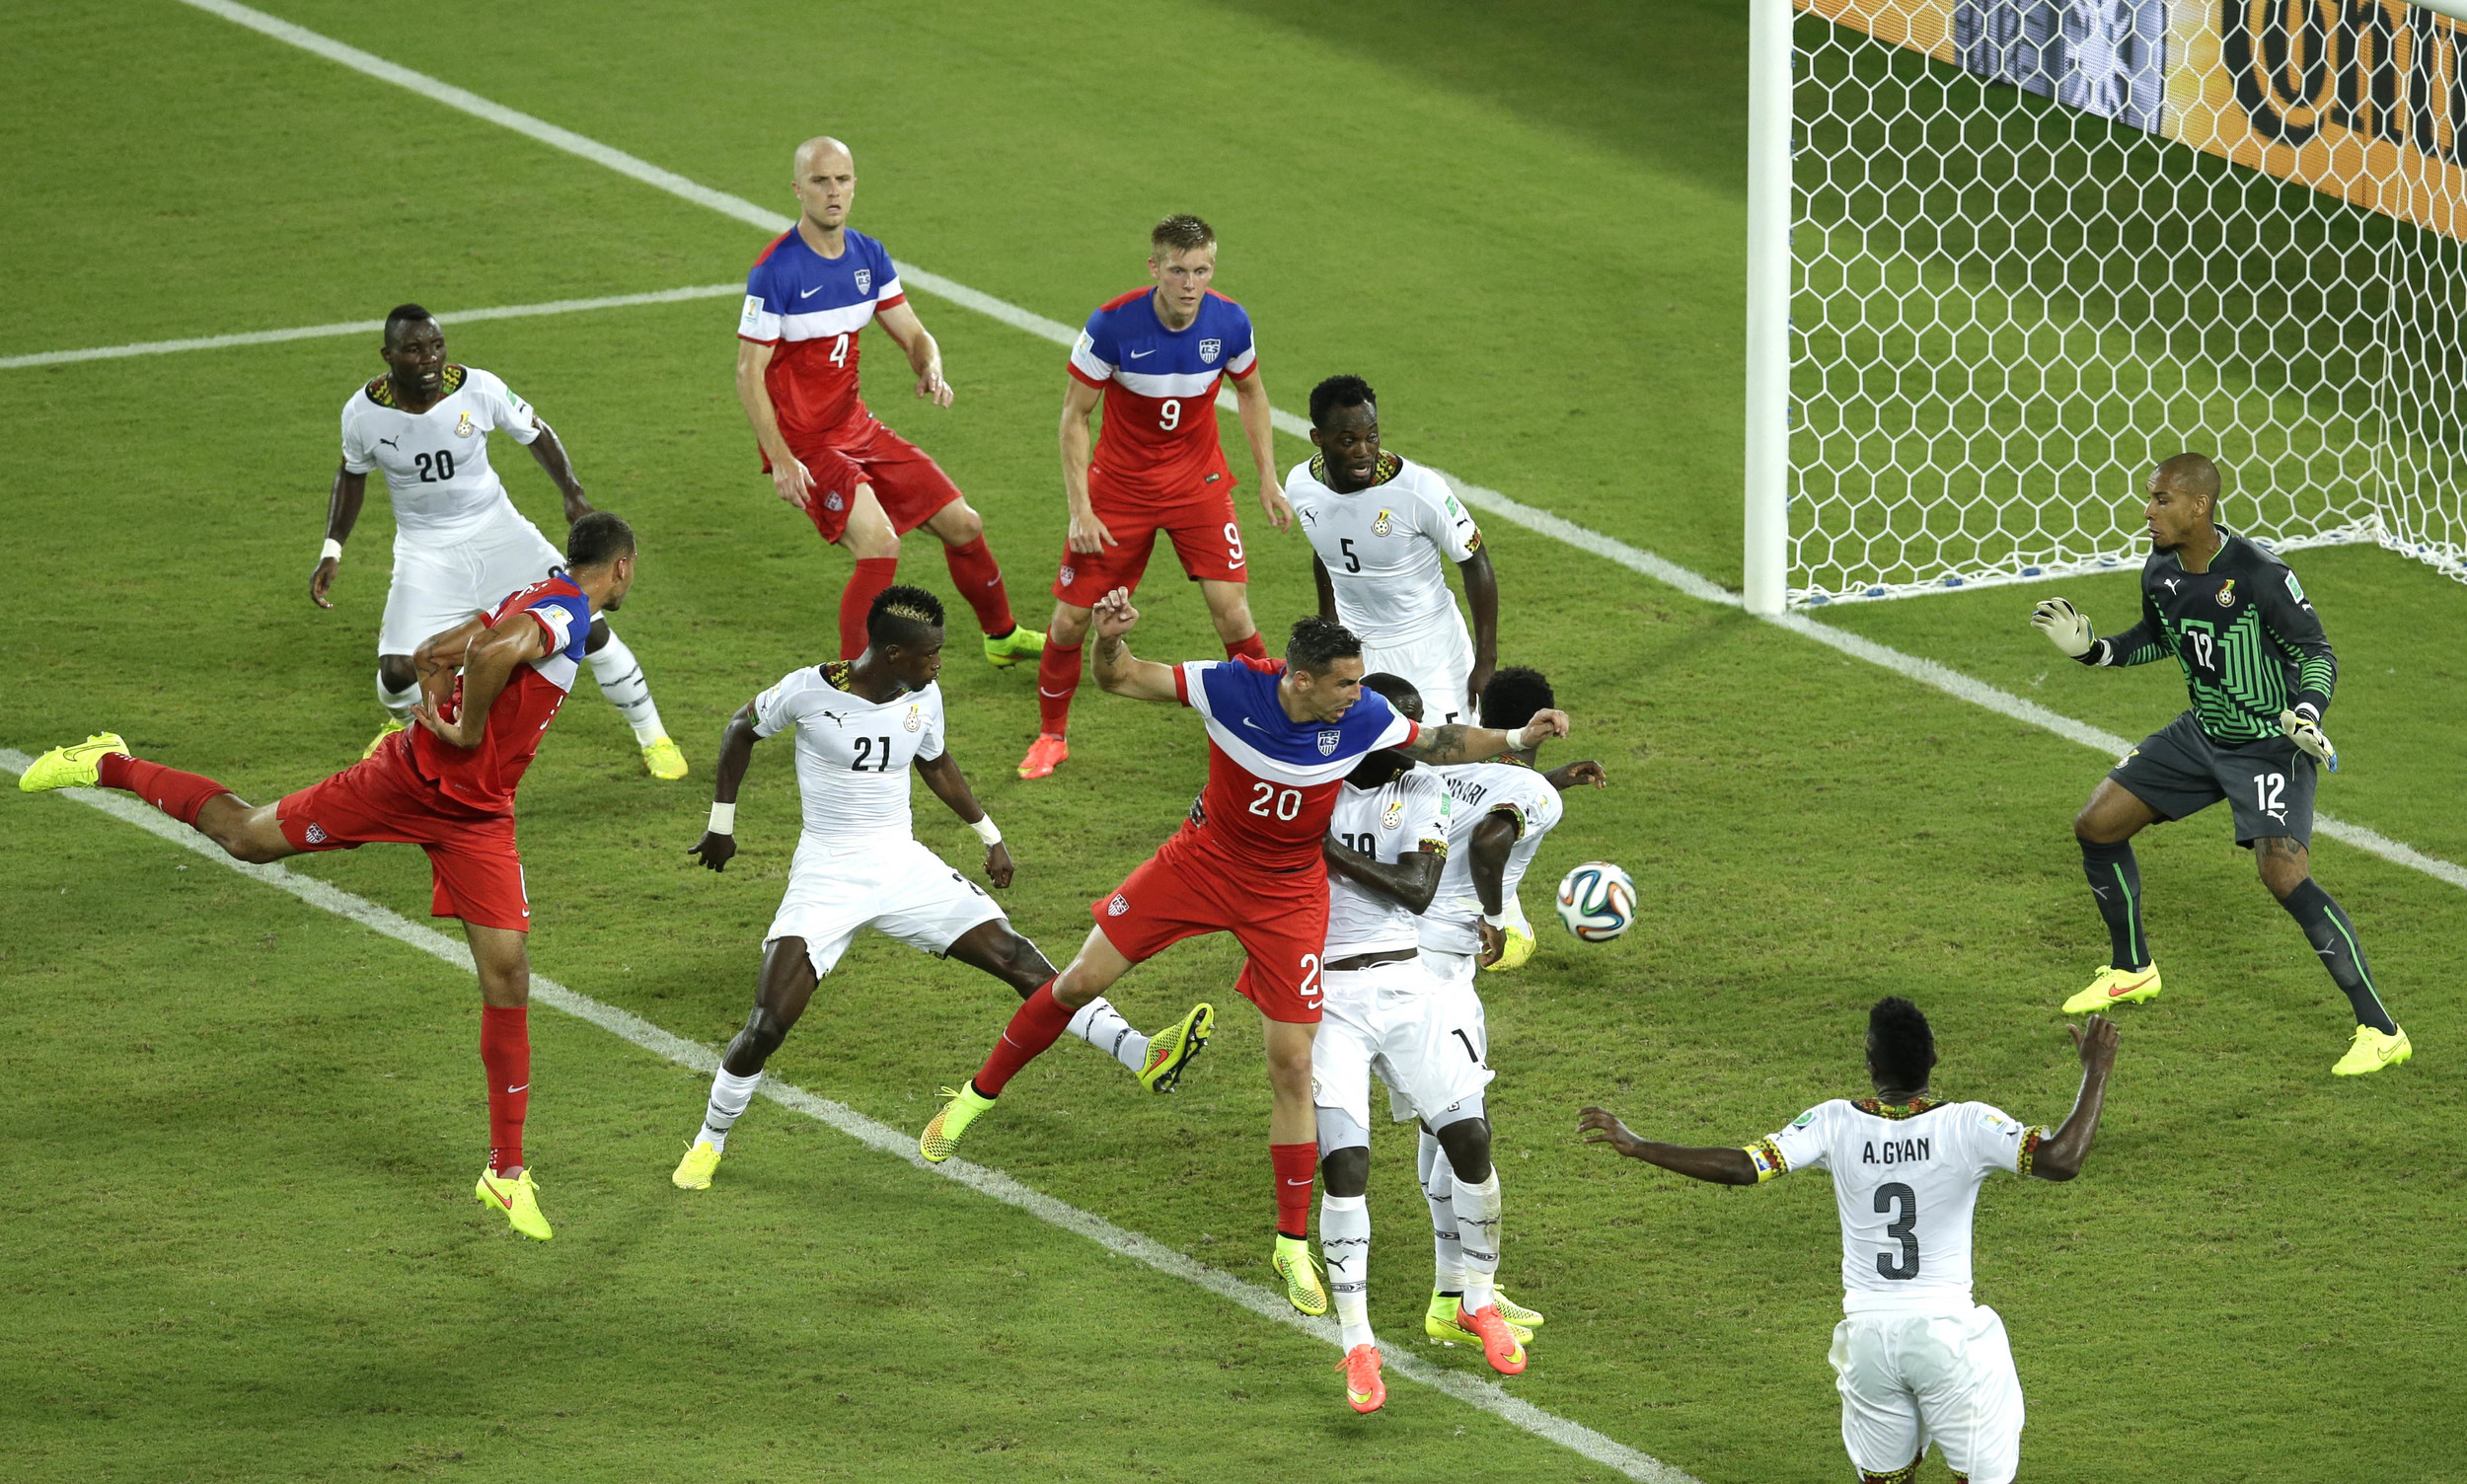 Brazil 2014: Ghana vs. USA match rigged? - Africa Top Sports